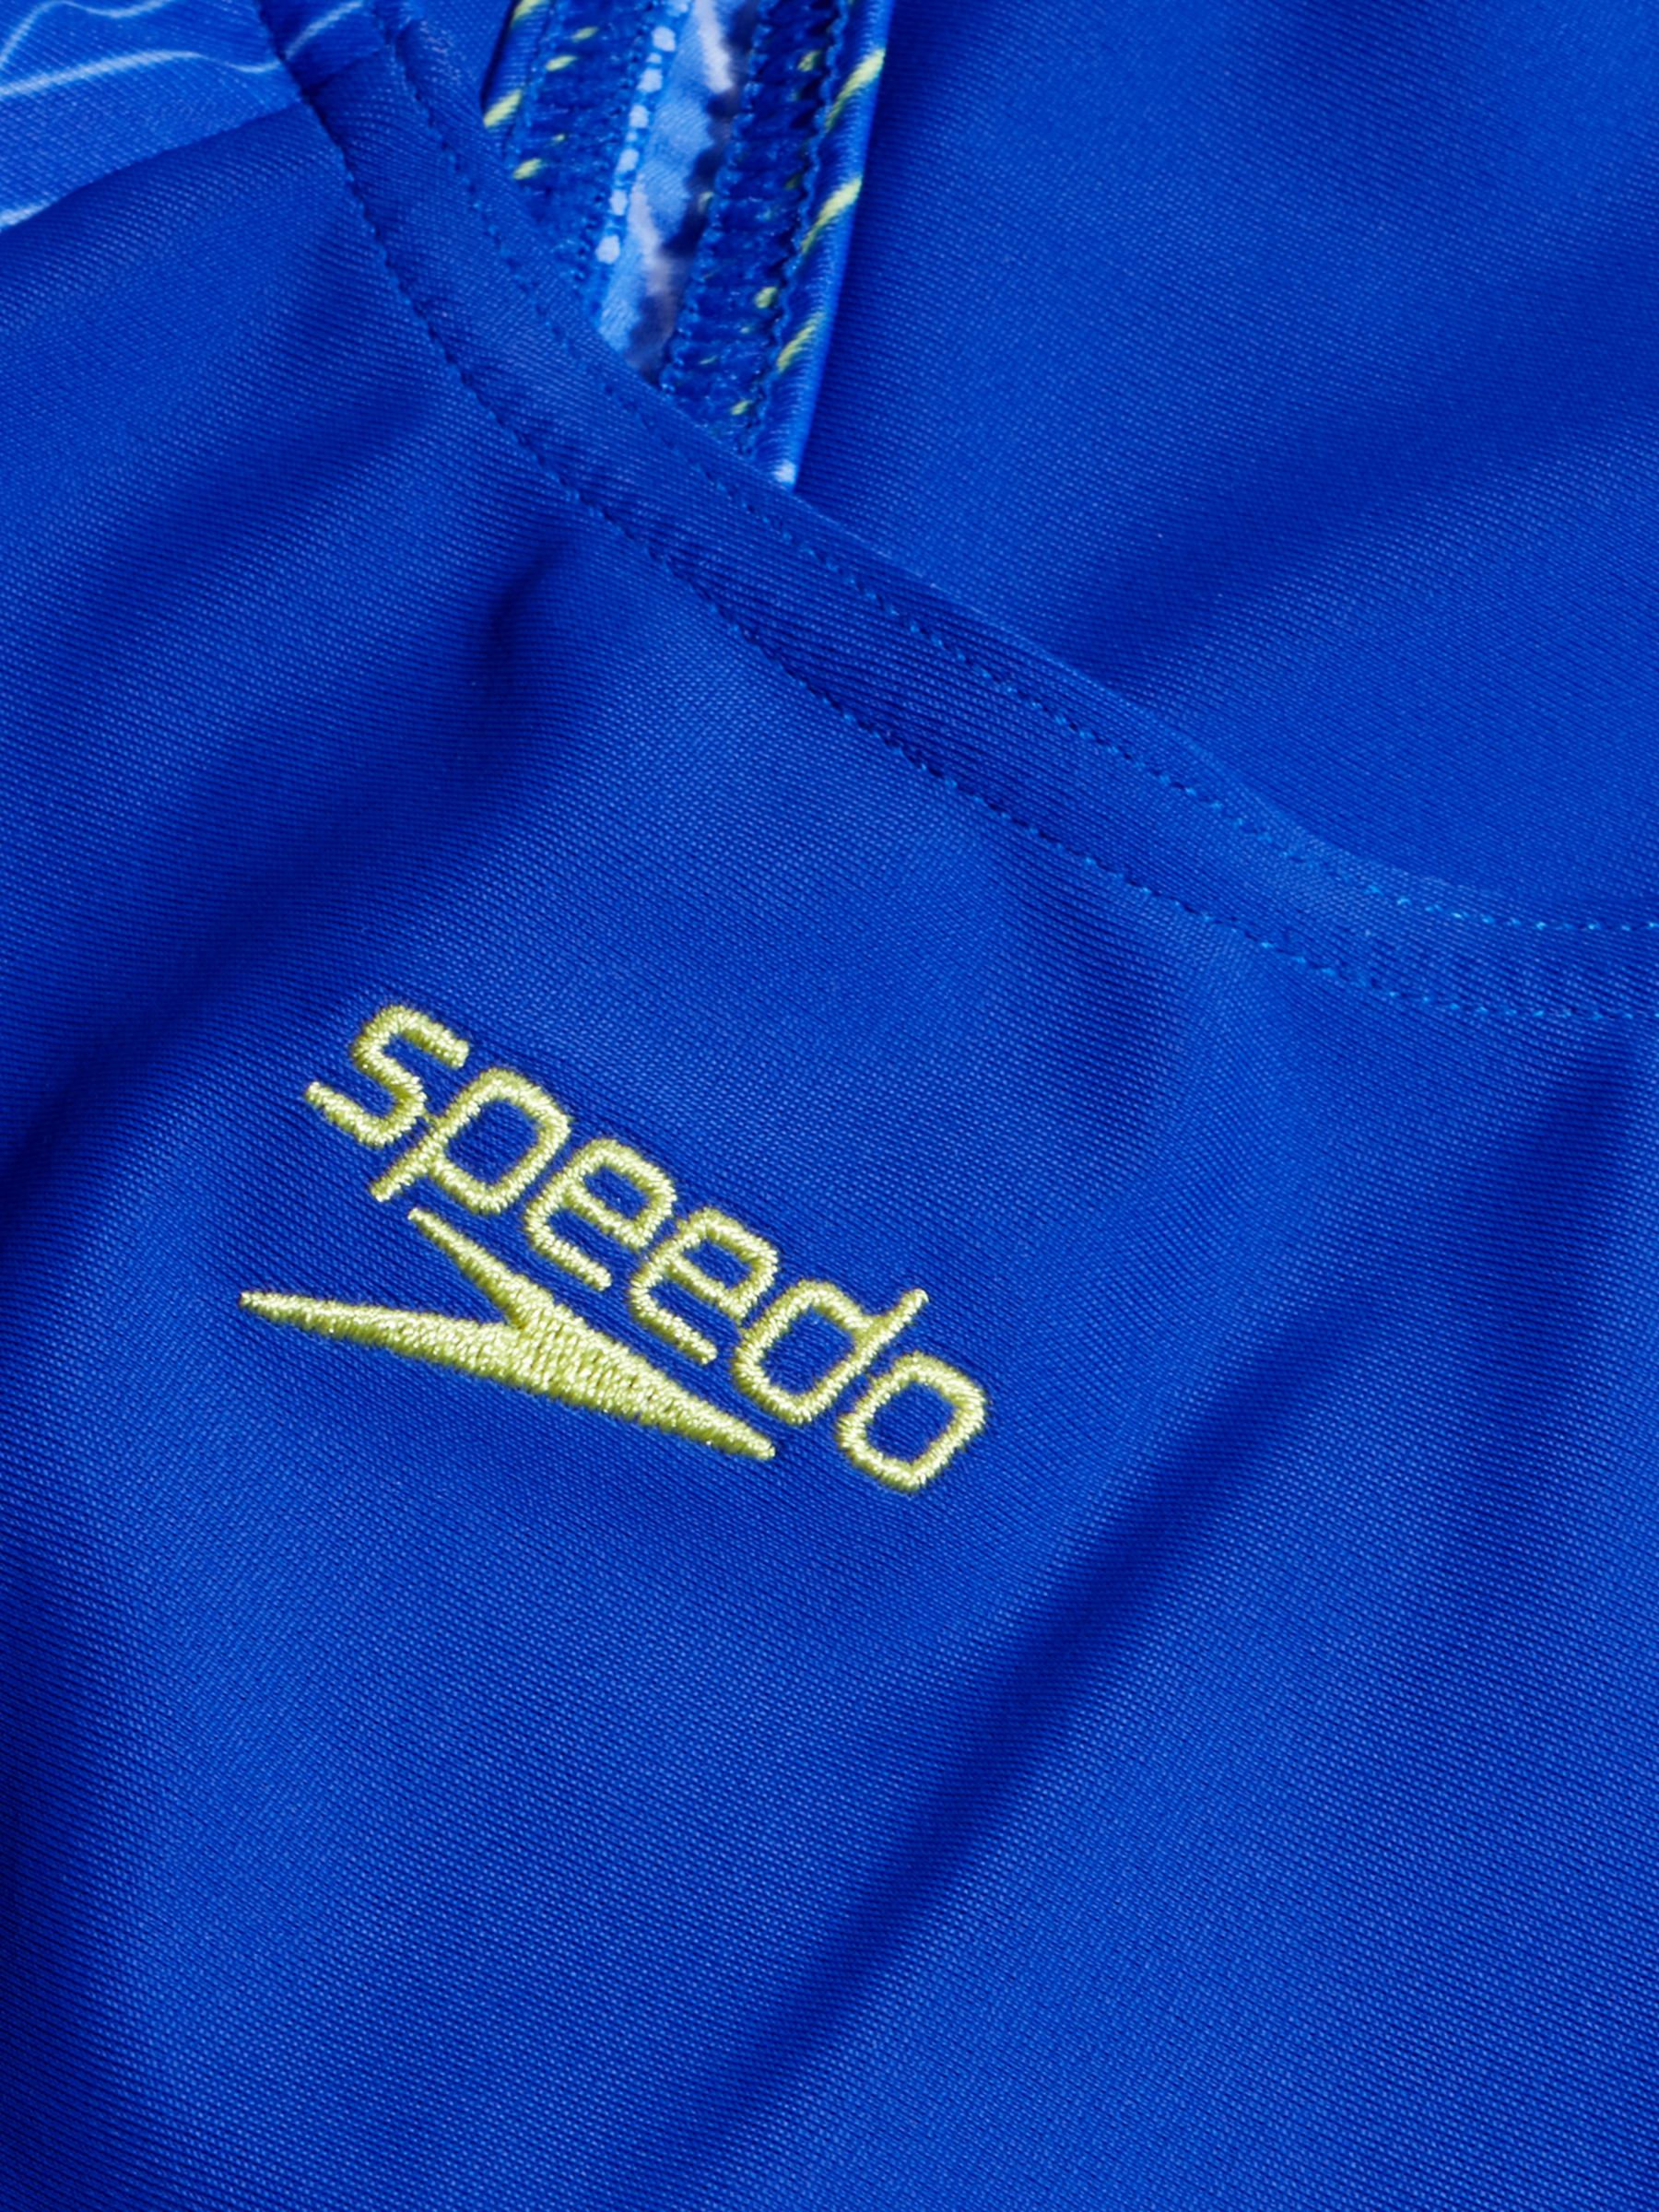 Speedo Kids' Hyperboom Slice Graphic Muscleback Swimsuit, Blue/Multi, 7-8 years